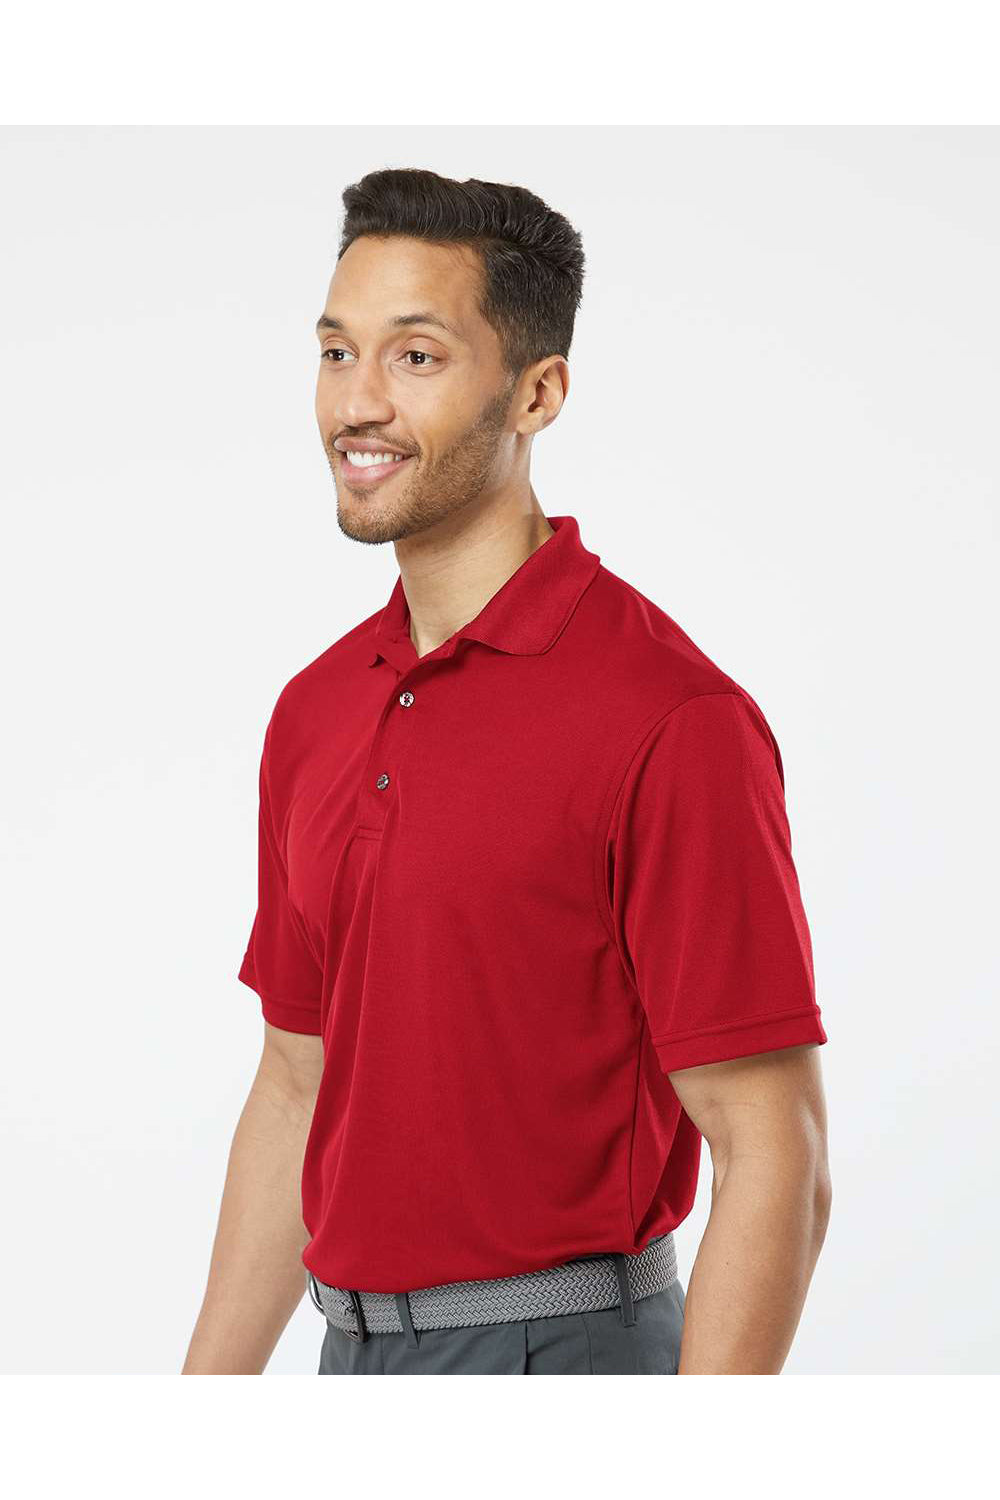 Paragon 100 Mens Saratoga Performance Mini Mesh Short Sleeve Polo Shirt Cardinal Red Model Side